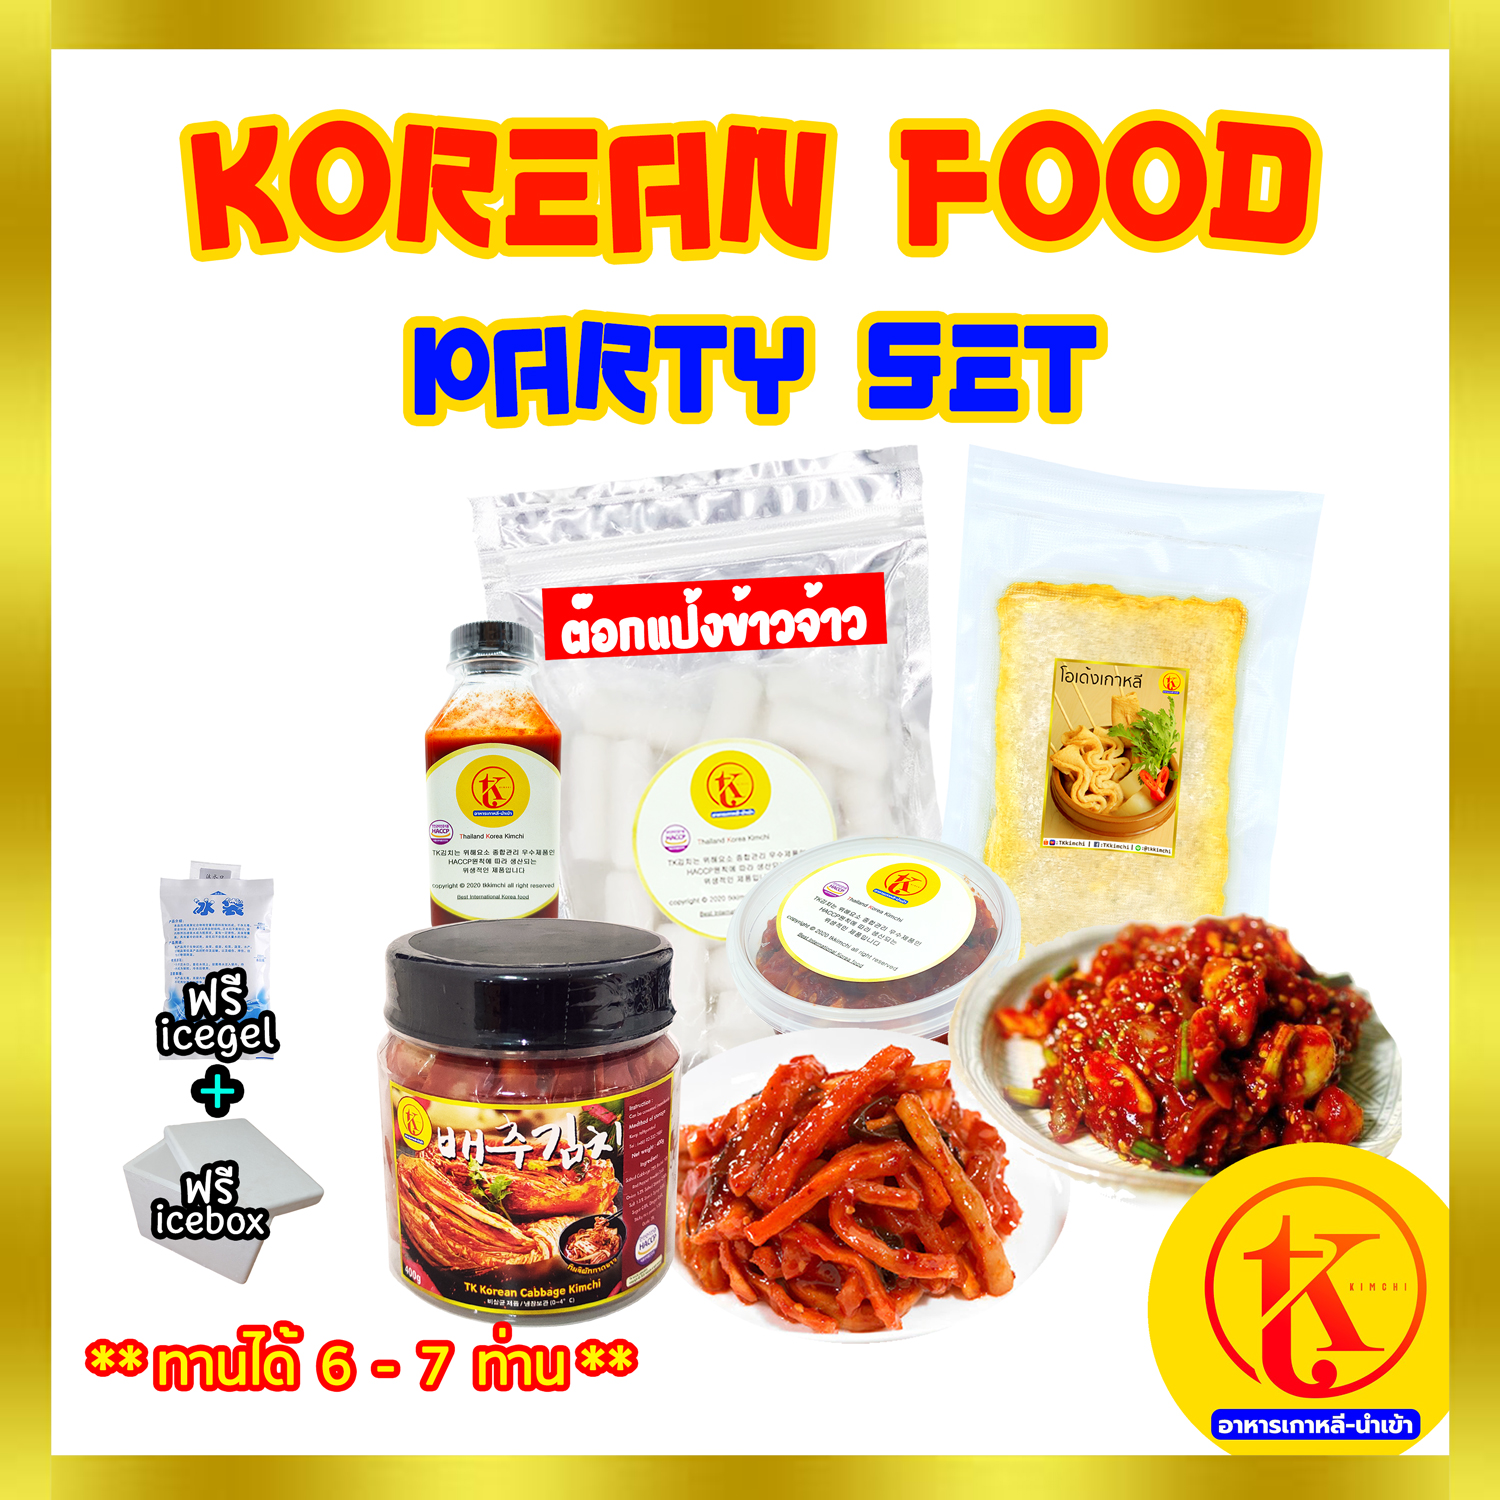 Korean Food Party set ชุดสุดคุ้ม อร่อยยกแก๊งค์ ? ต๊อกแป้งข้าวจ้าว ? ? ชุดกลาง สำหรับ 6 - 7 ท่าน ? by TKkimchi